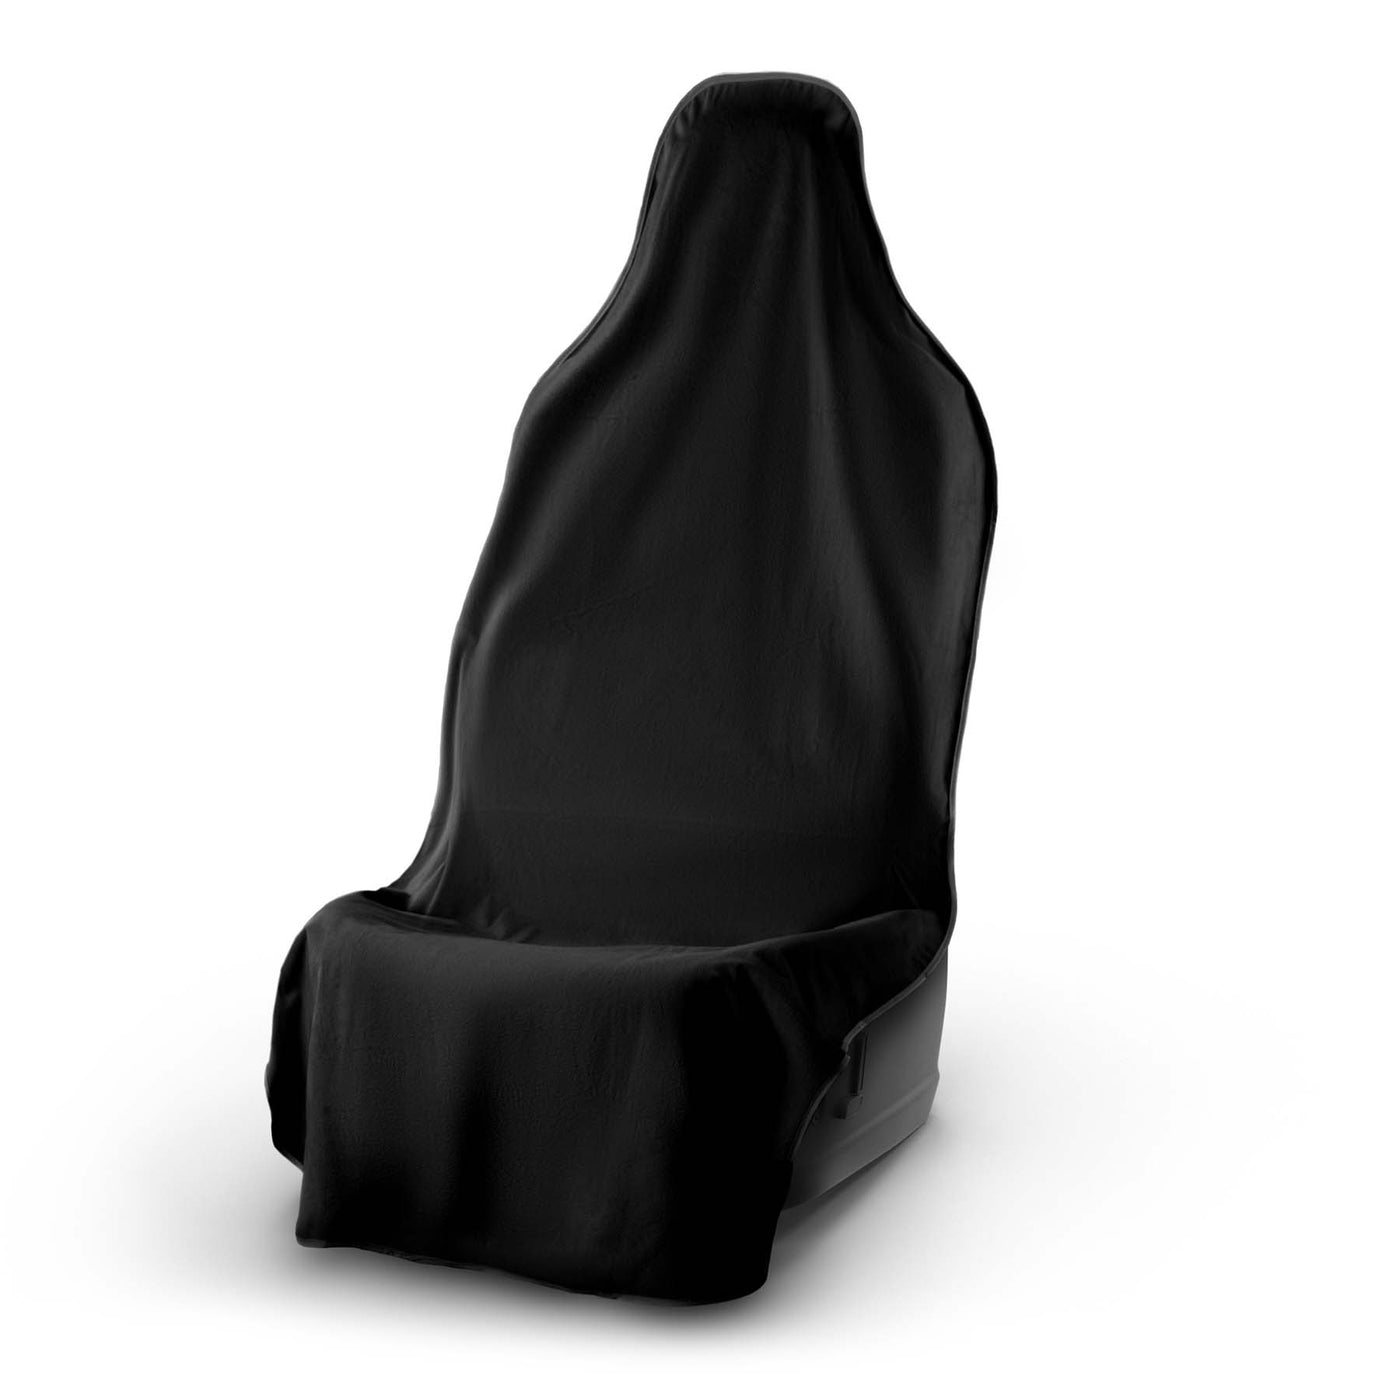 EliteSport+ Non-Slip Waterproof Seat Cover - Black